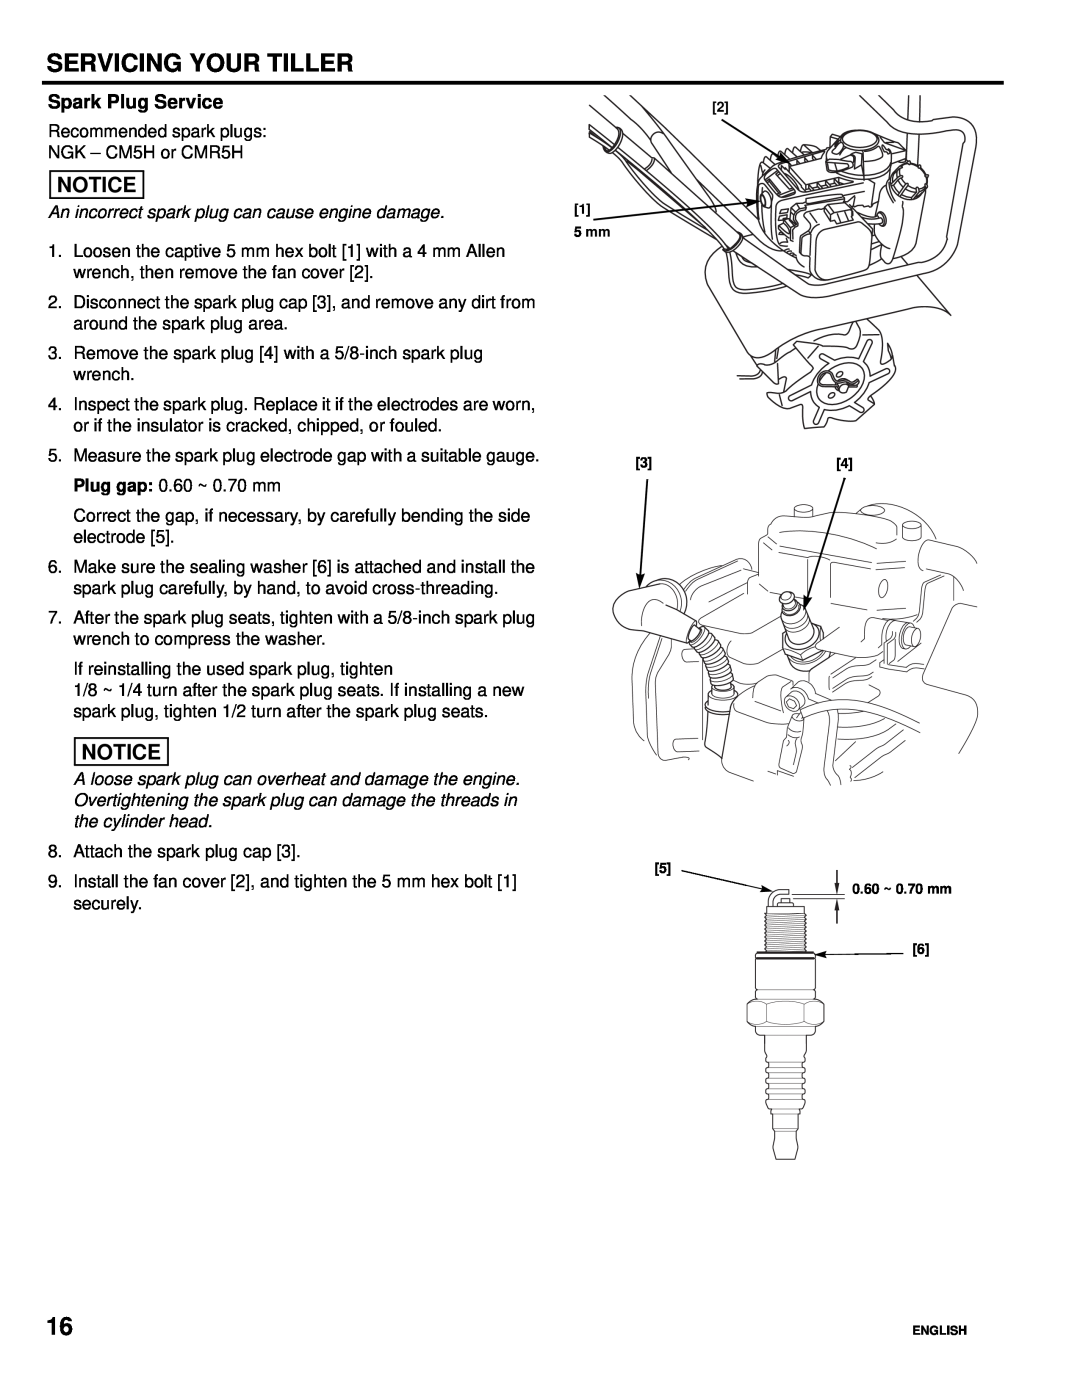 Honda Power Equipment FG110, Honda Mini-Tiller specifications Spark Plug Service, Servicing Your Tiller 